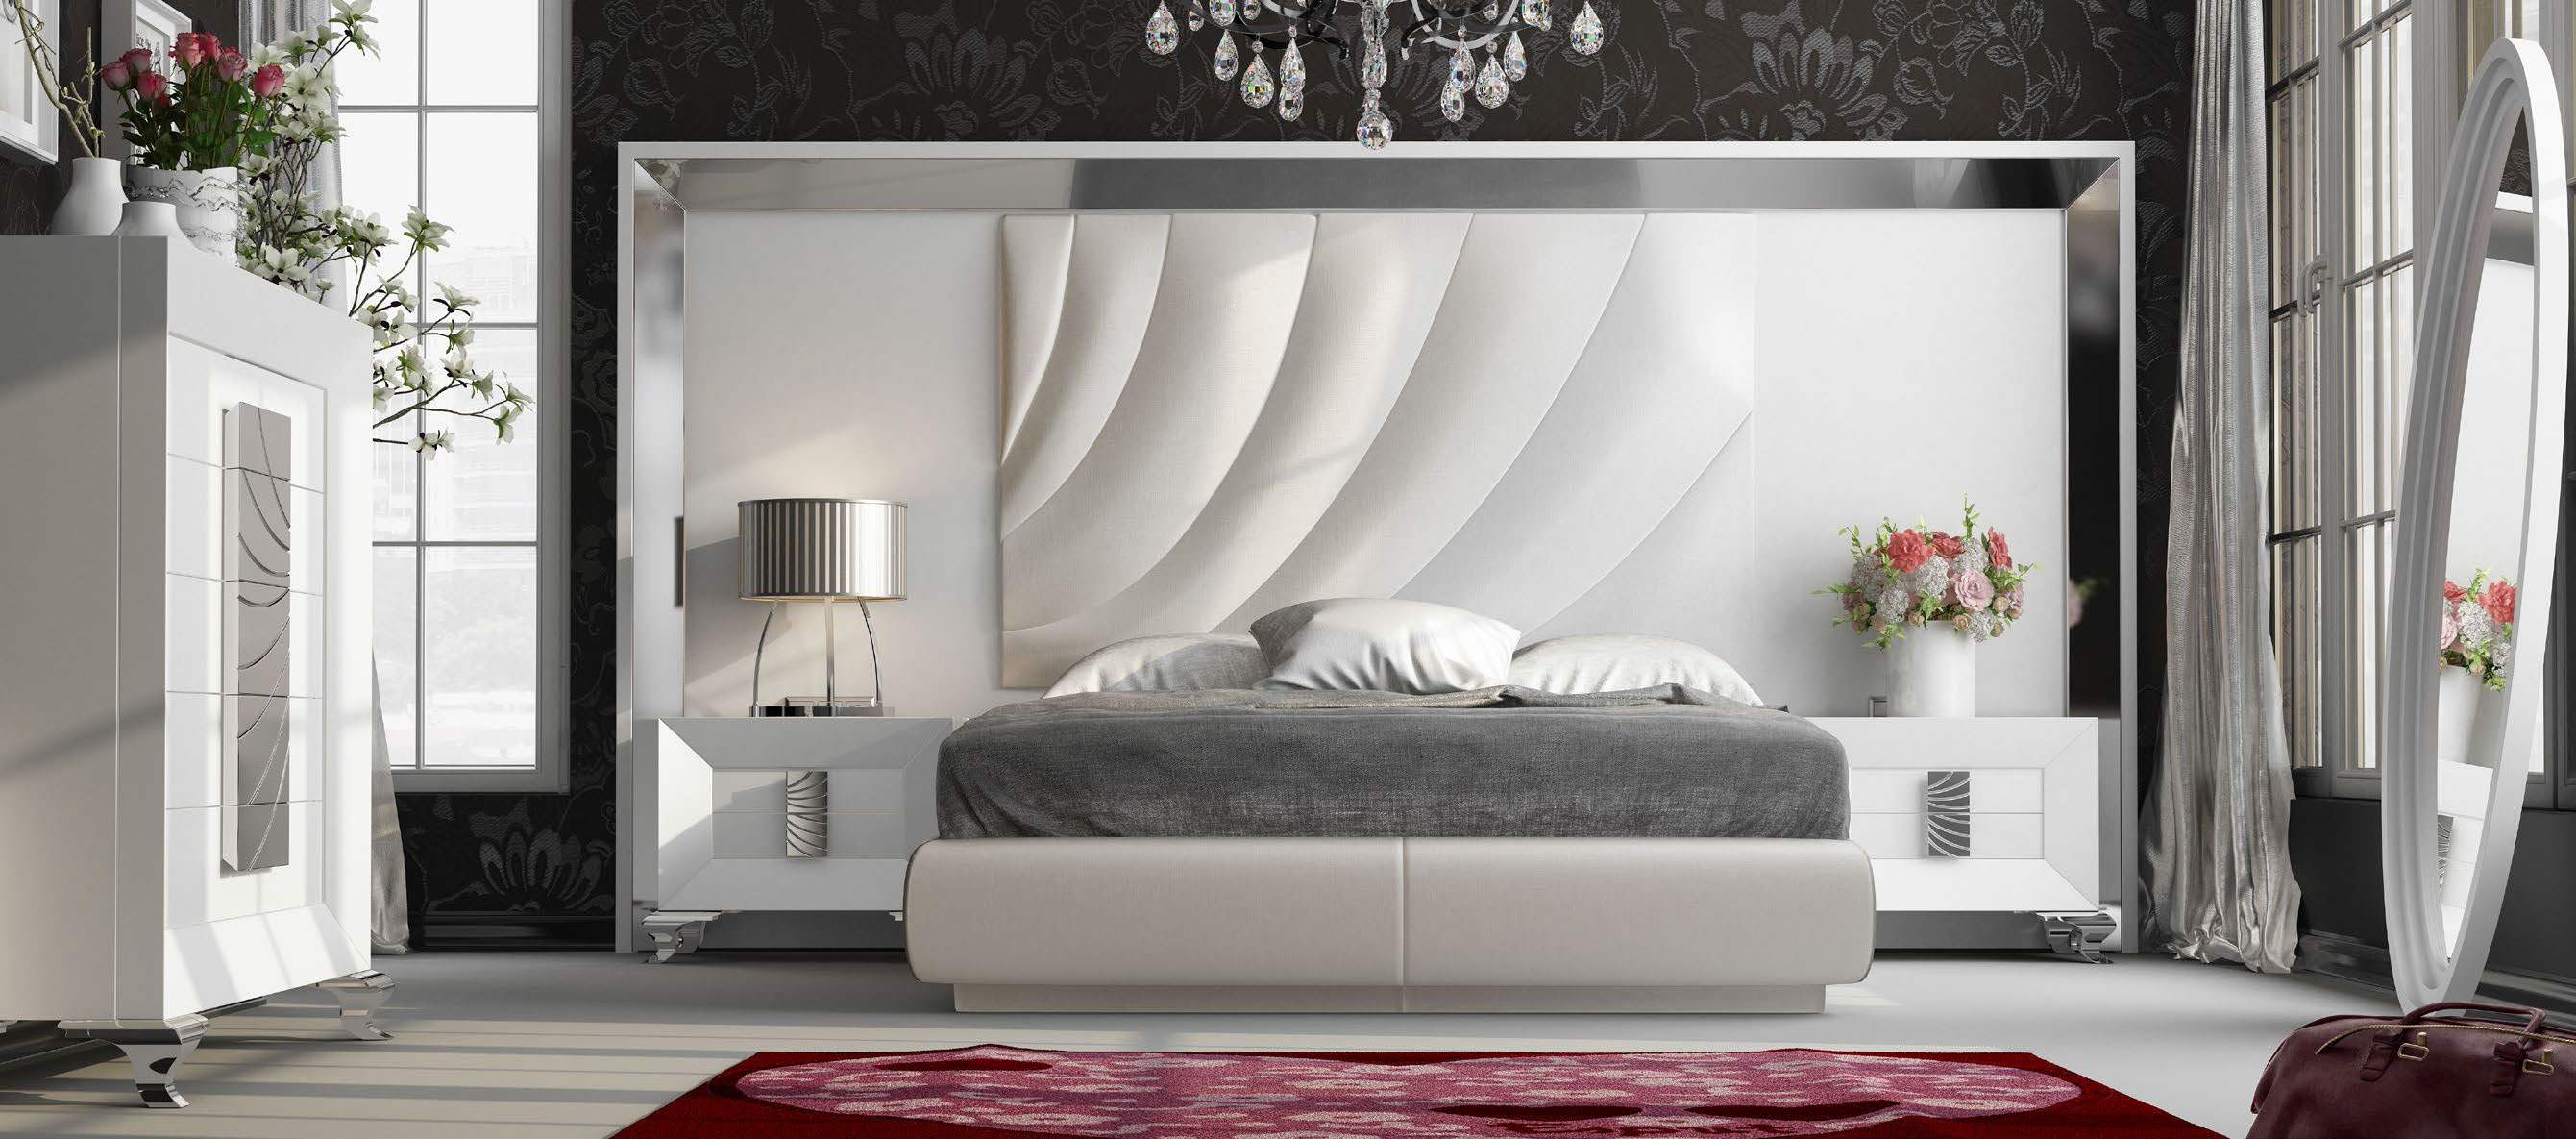 Brands Franco Furniture Bedrooms vol2, Spain DOR 129